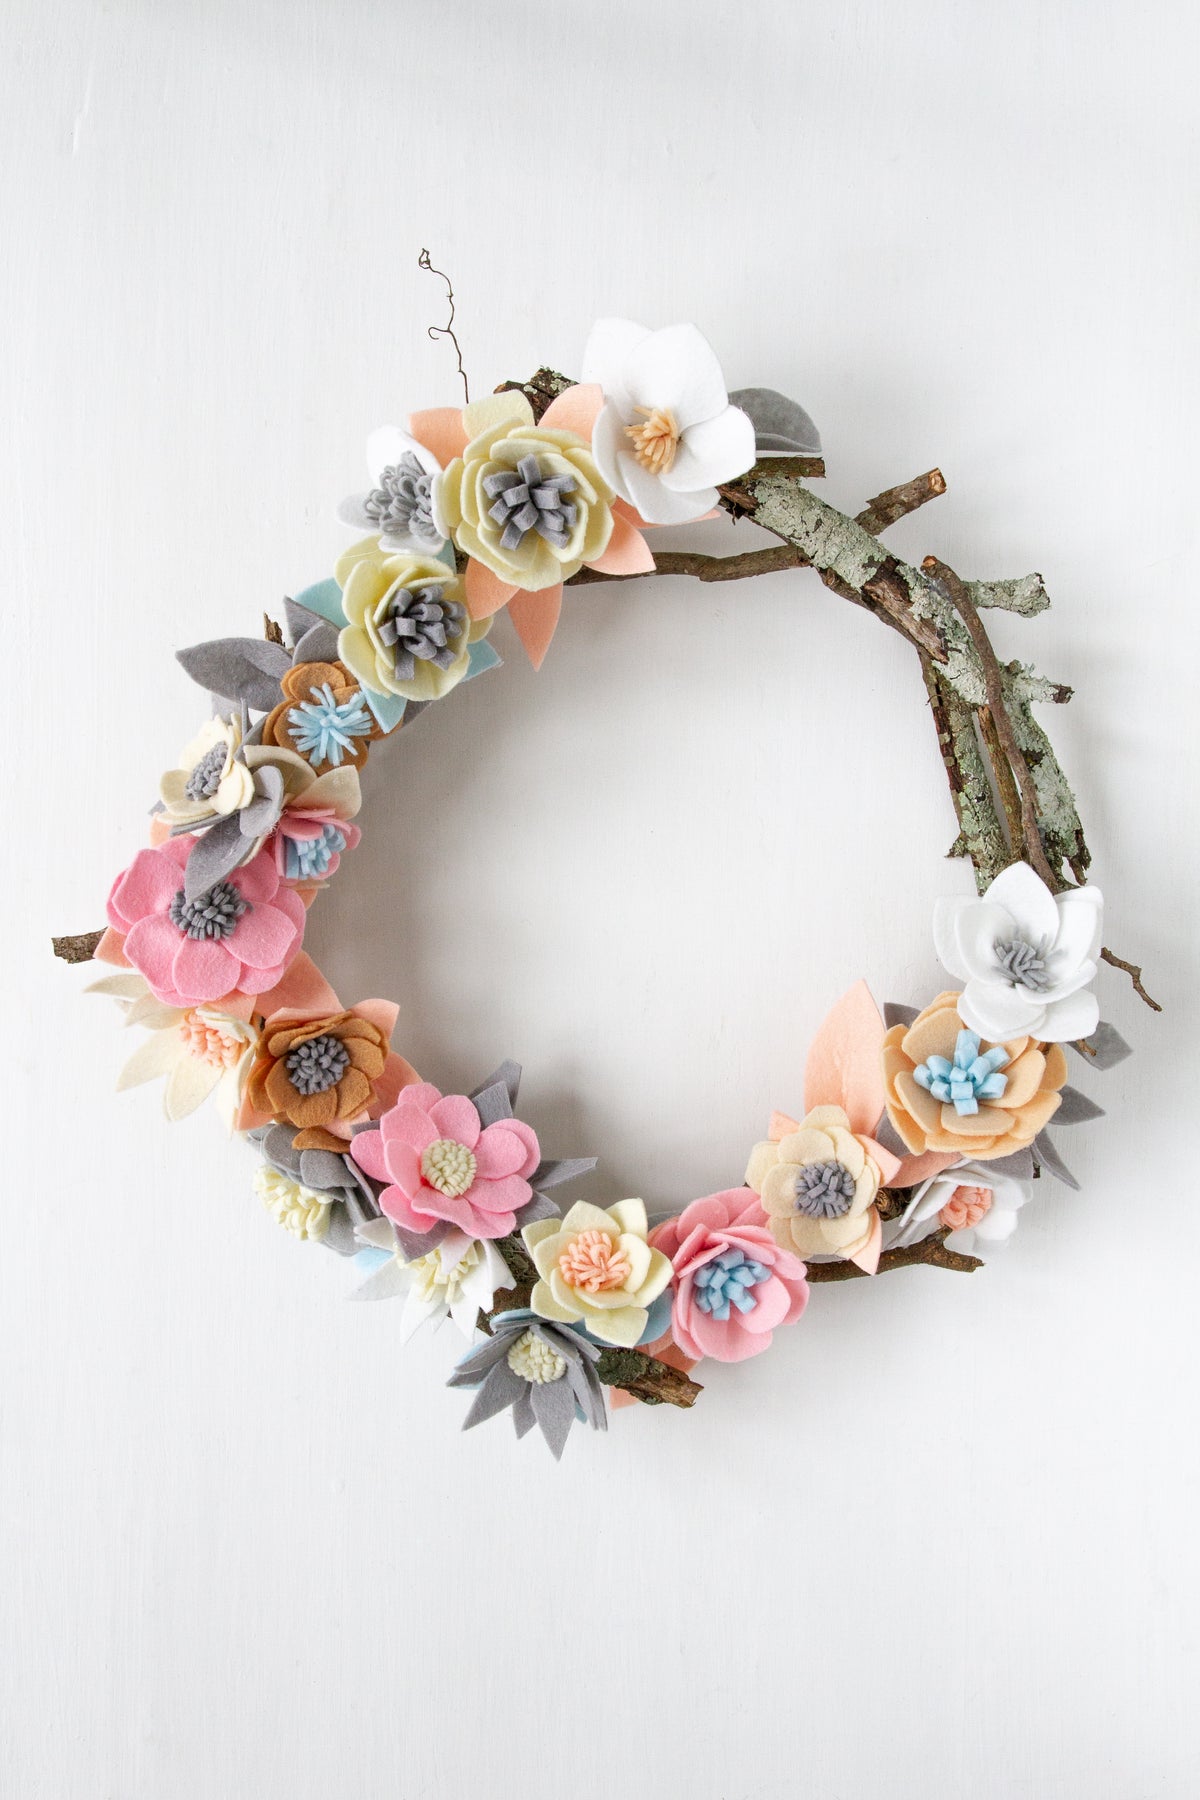 DIY: Felt Flower Wreath